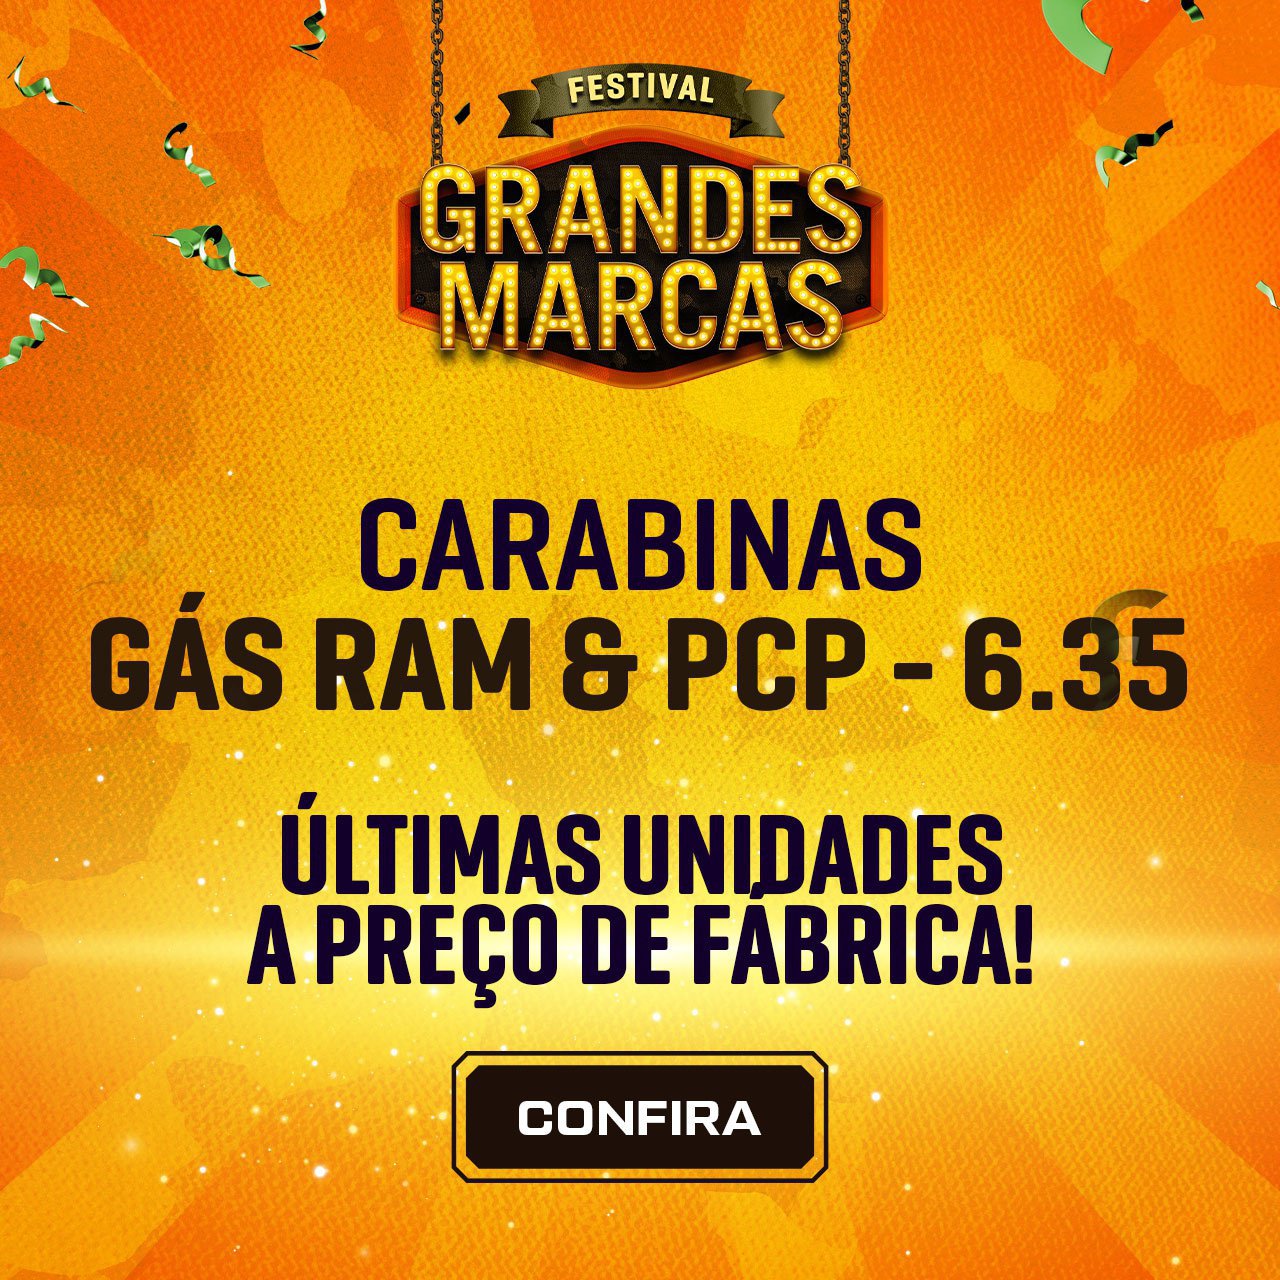 CARABINAS GAS RAM & PCP - 6.35 - Últimas Unidades a Preço de Fábrica!